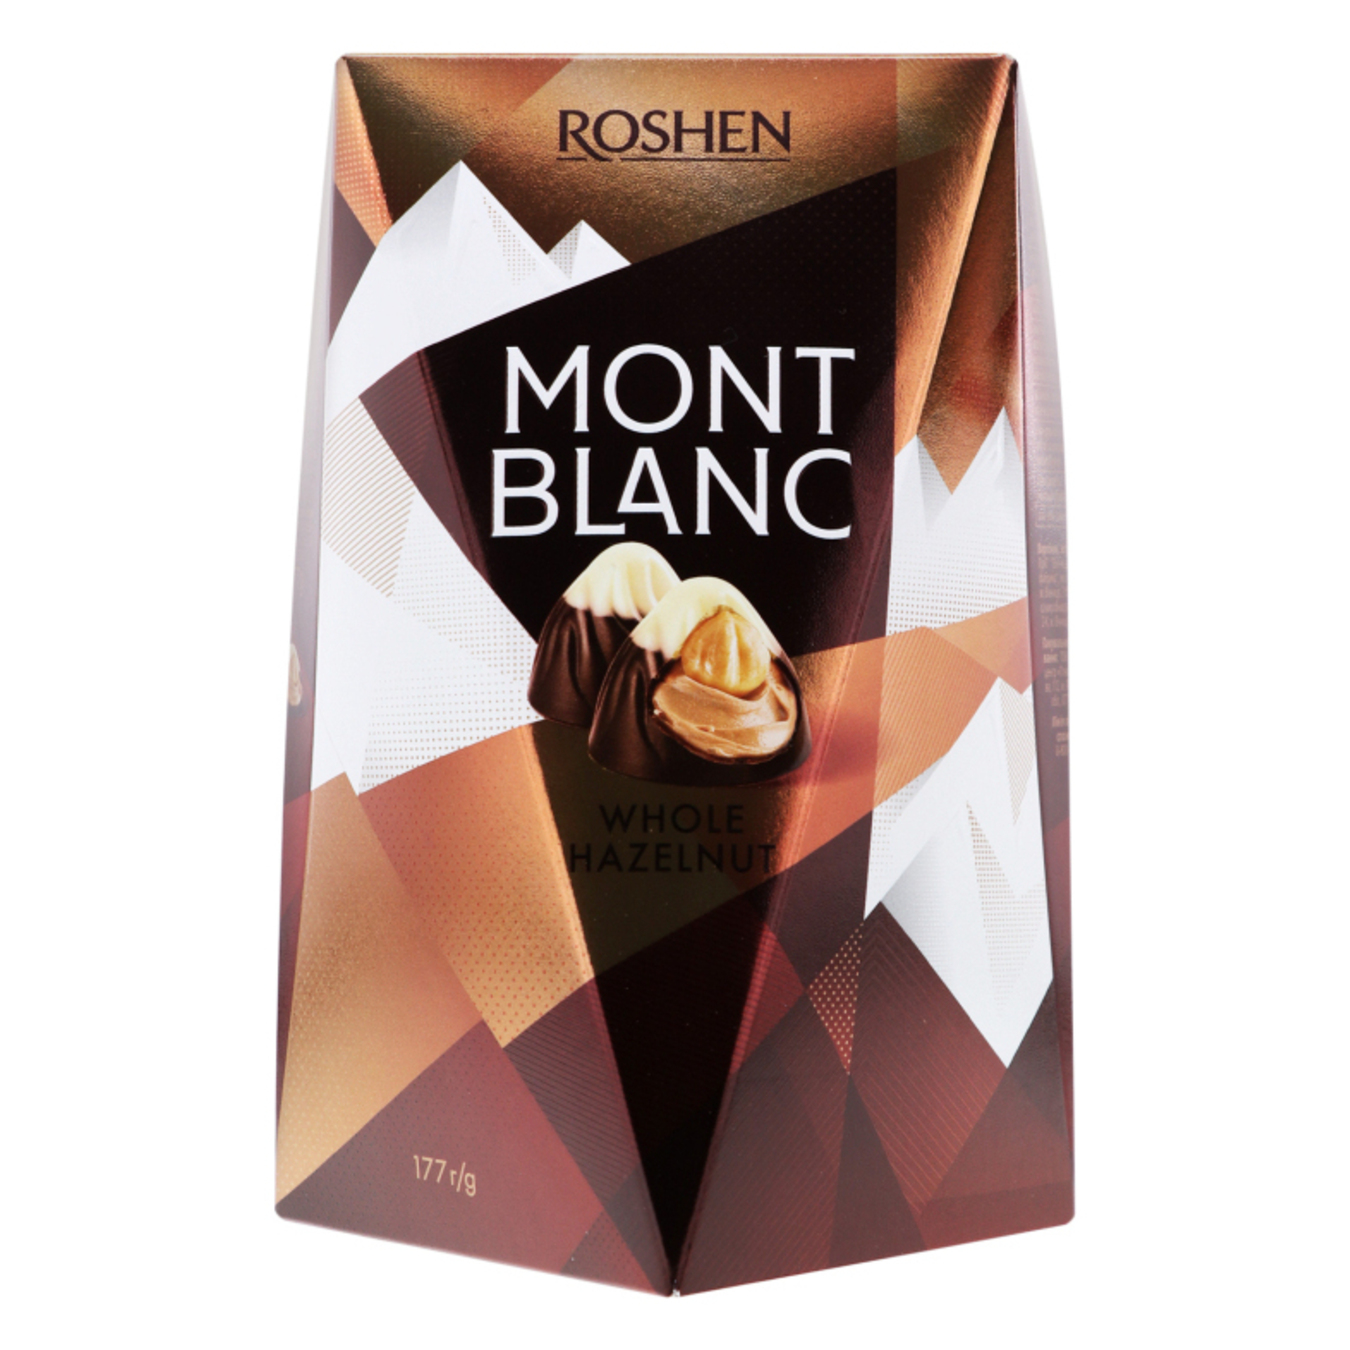 Roshen Mont Blanc candies with whole hazelnuts 177g